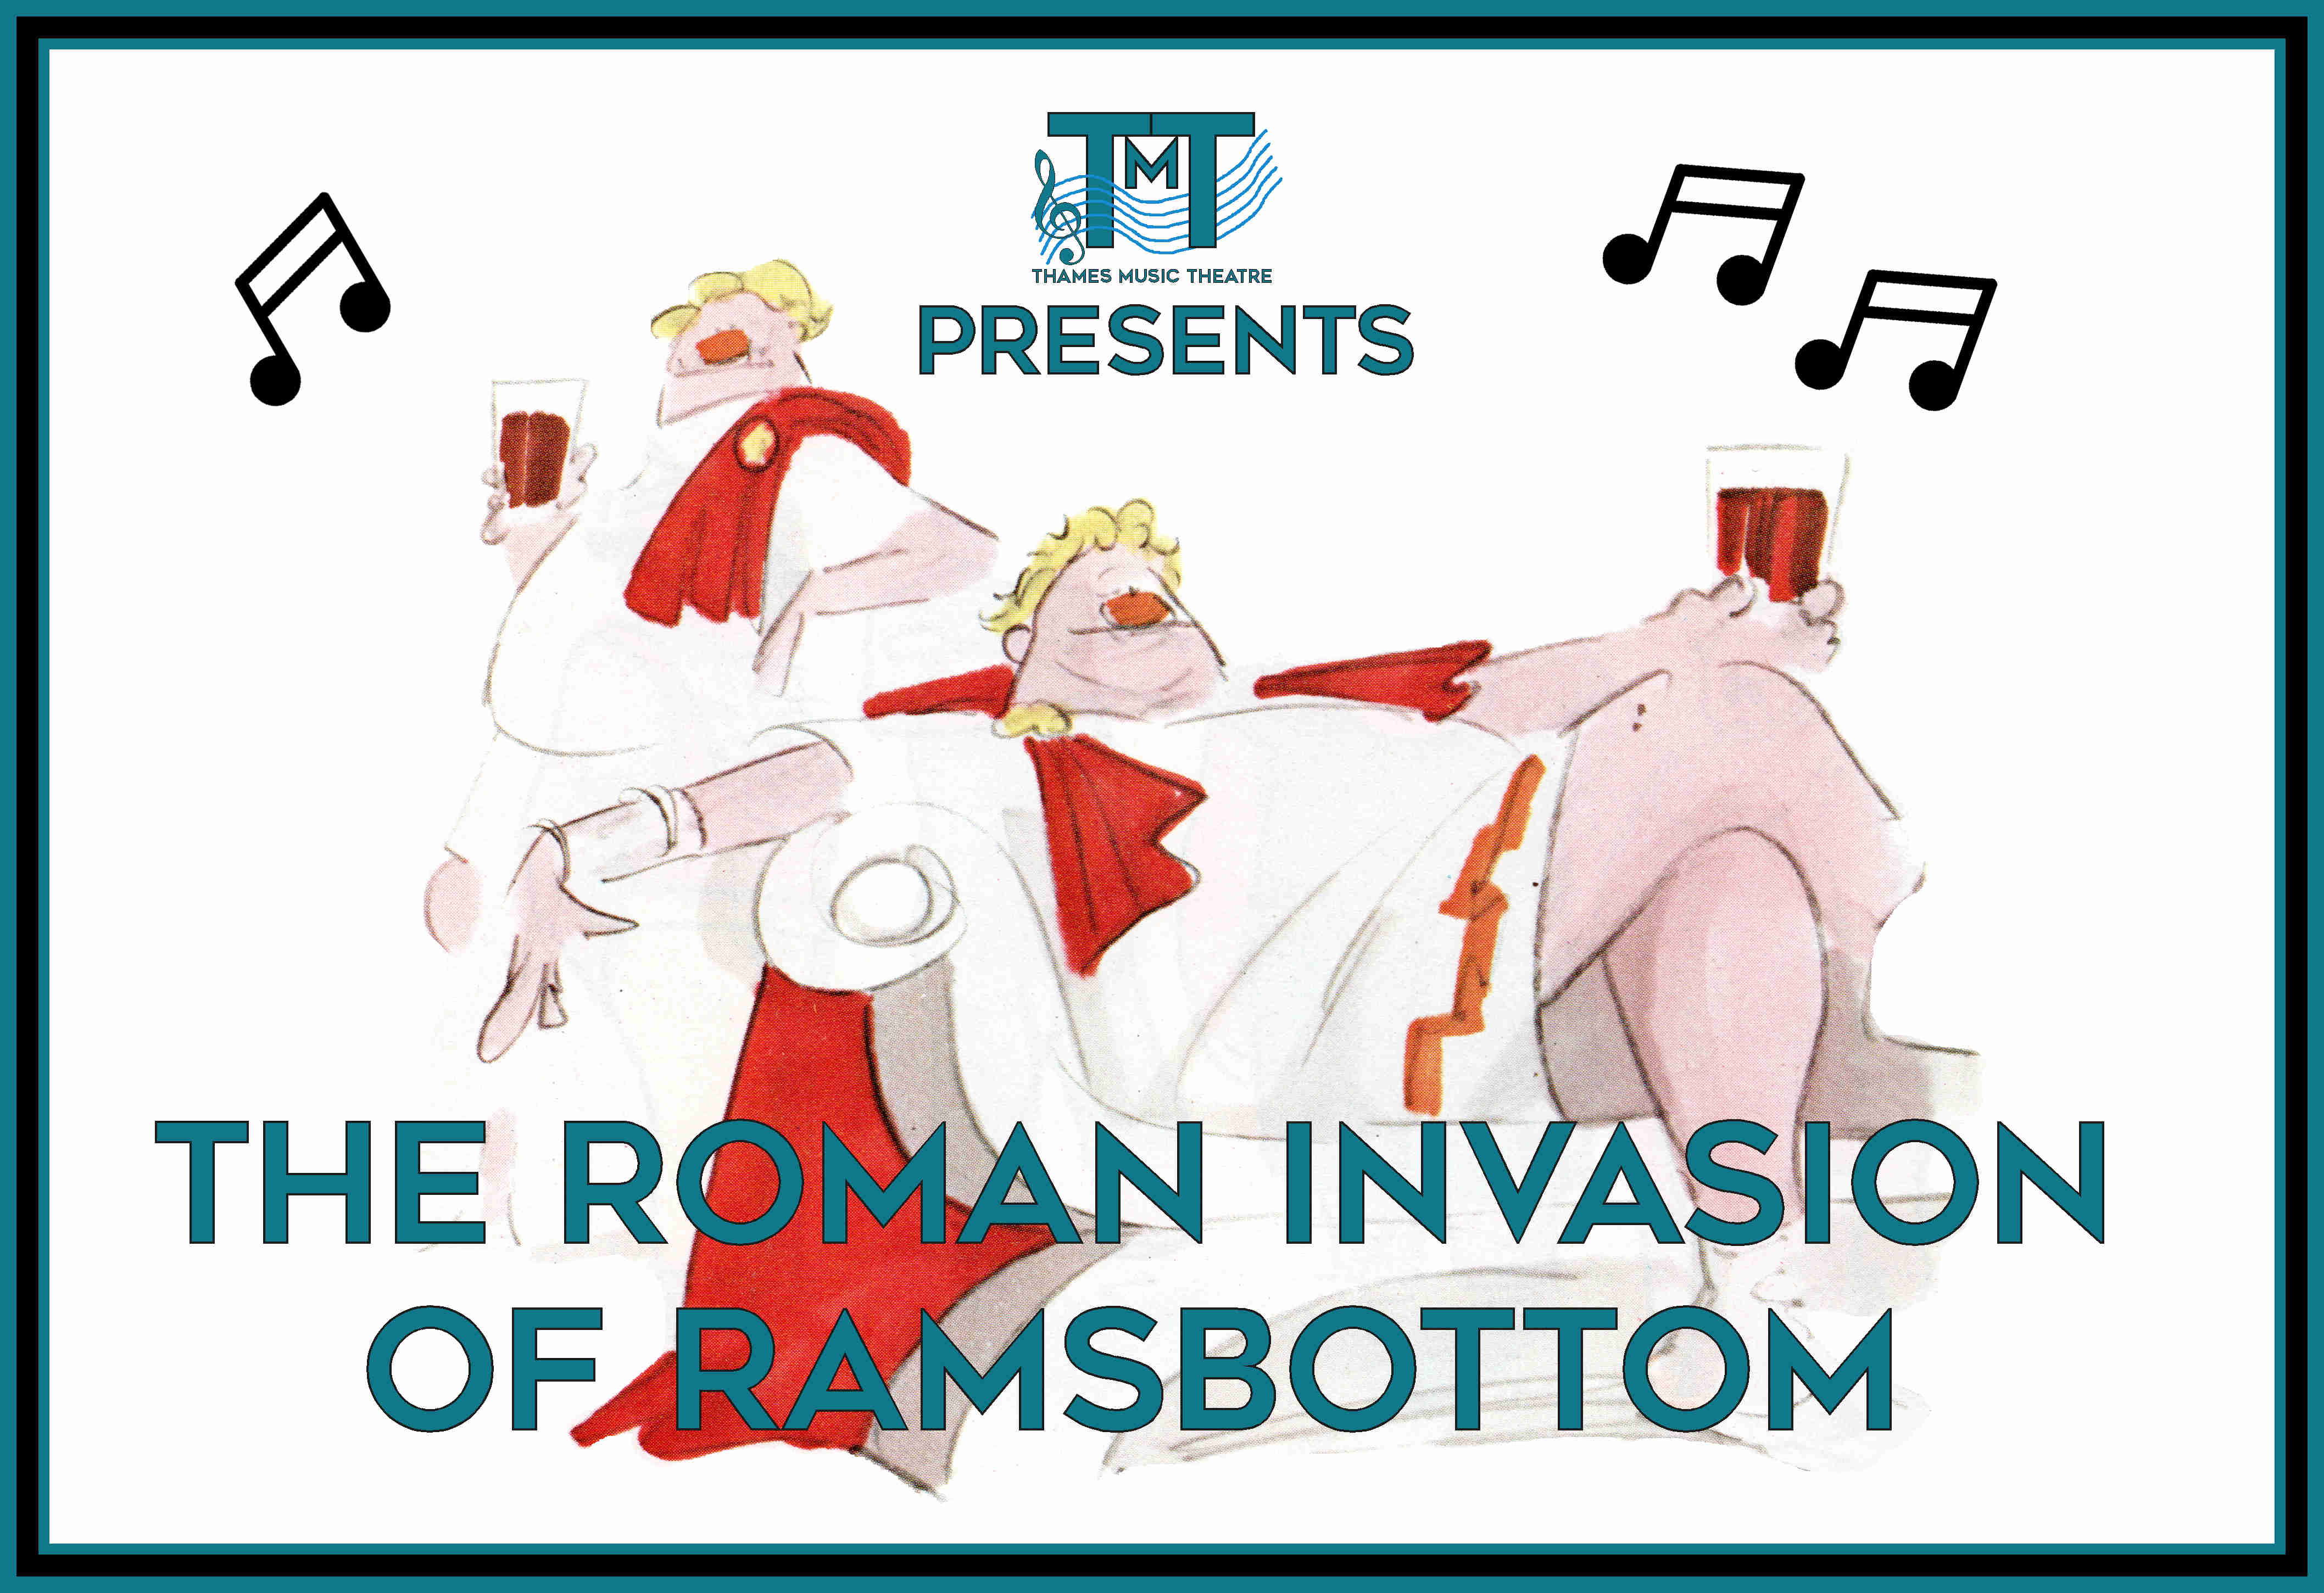 The Roman Invasion of Ramsbottom